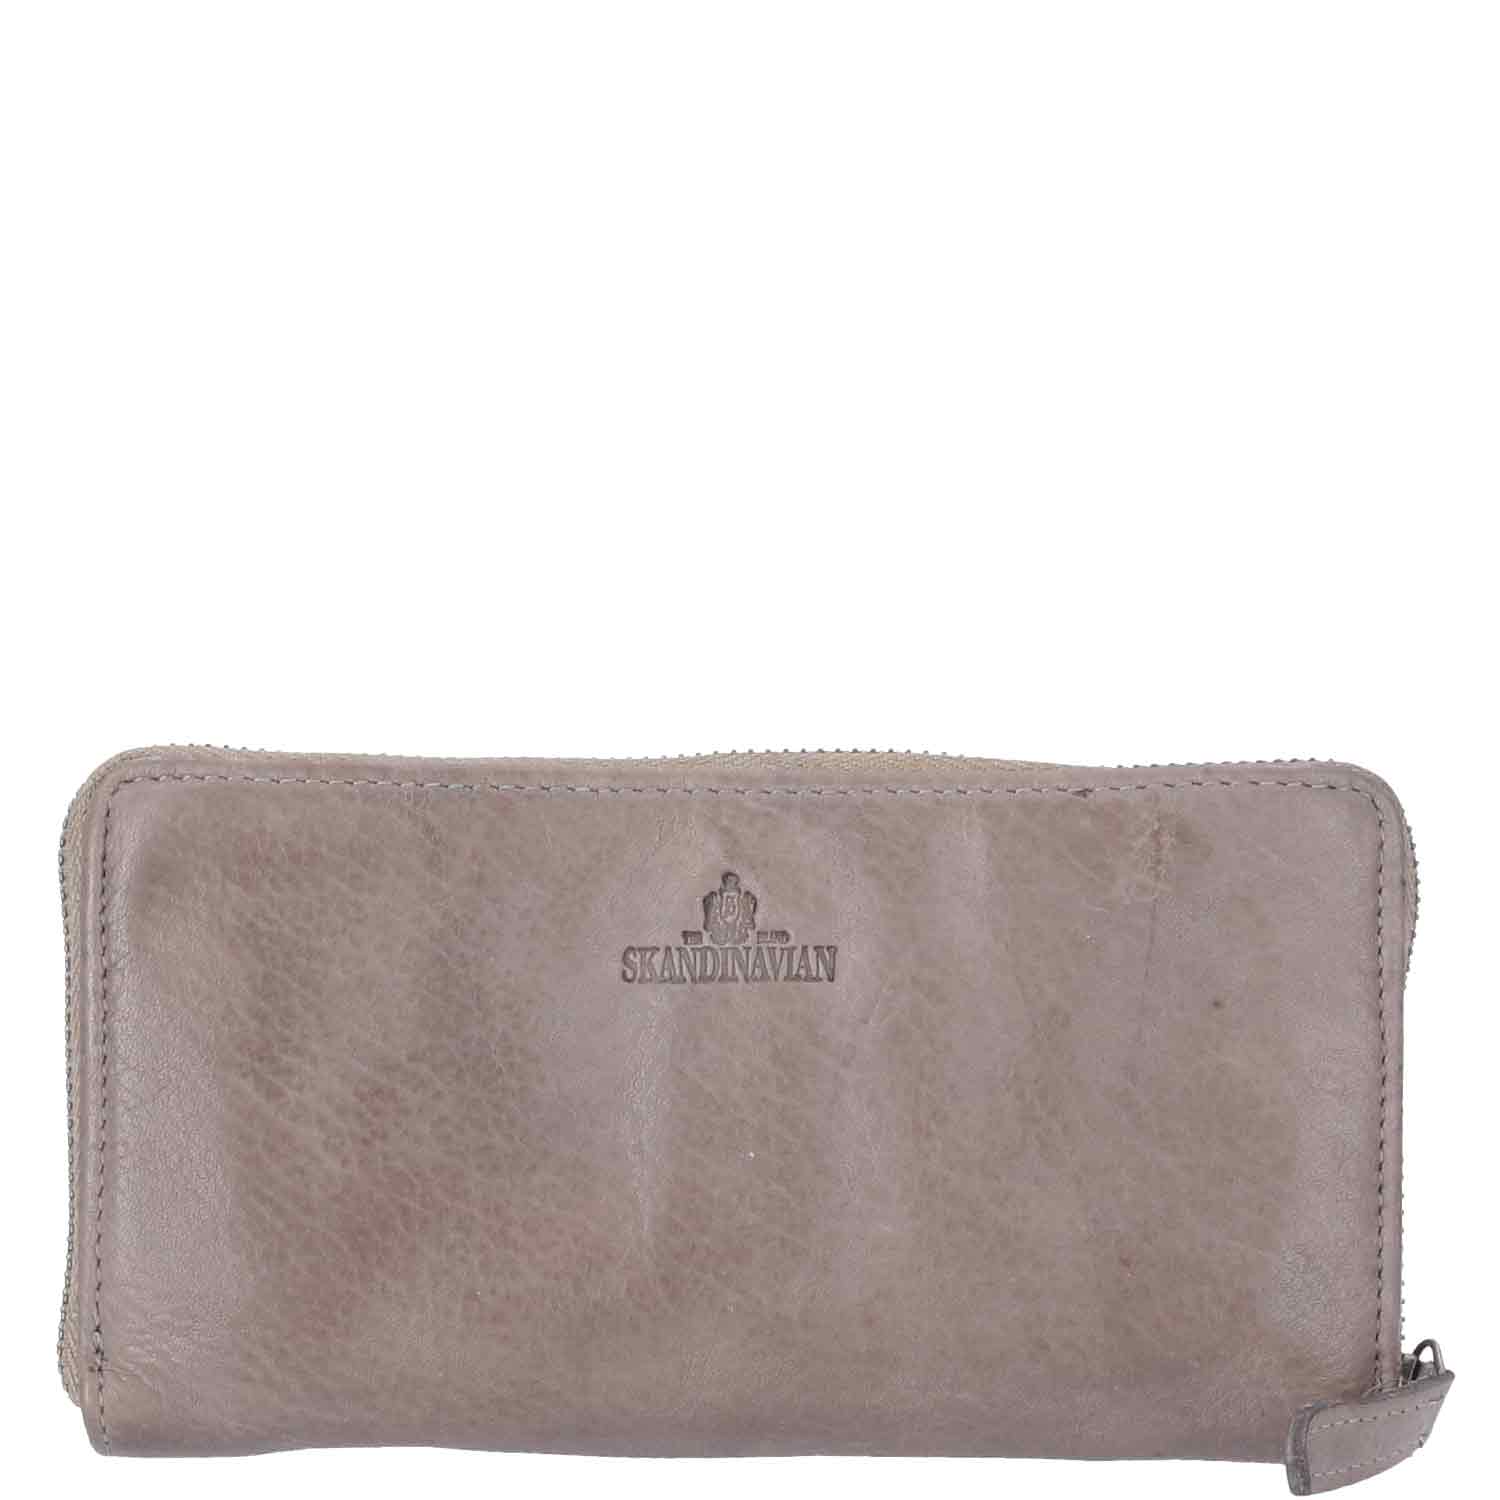 The Skandinavian Brand Lady Zip Wallet Washed Leather grau